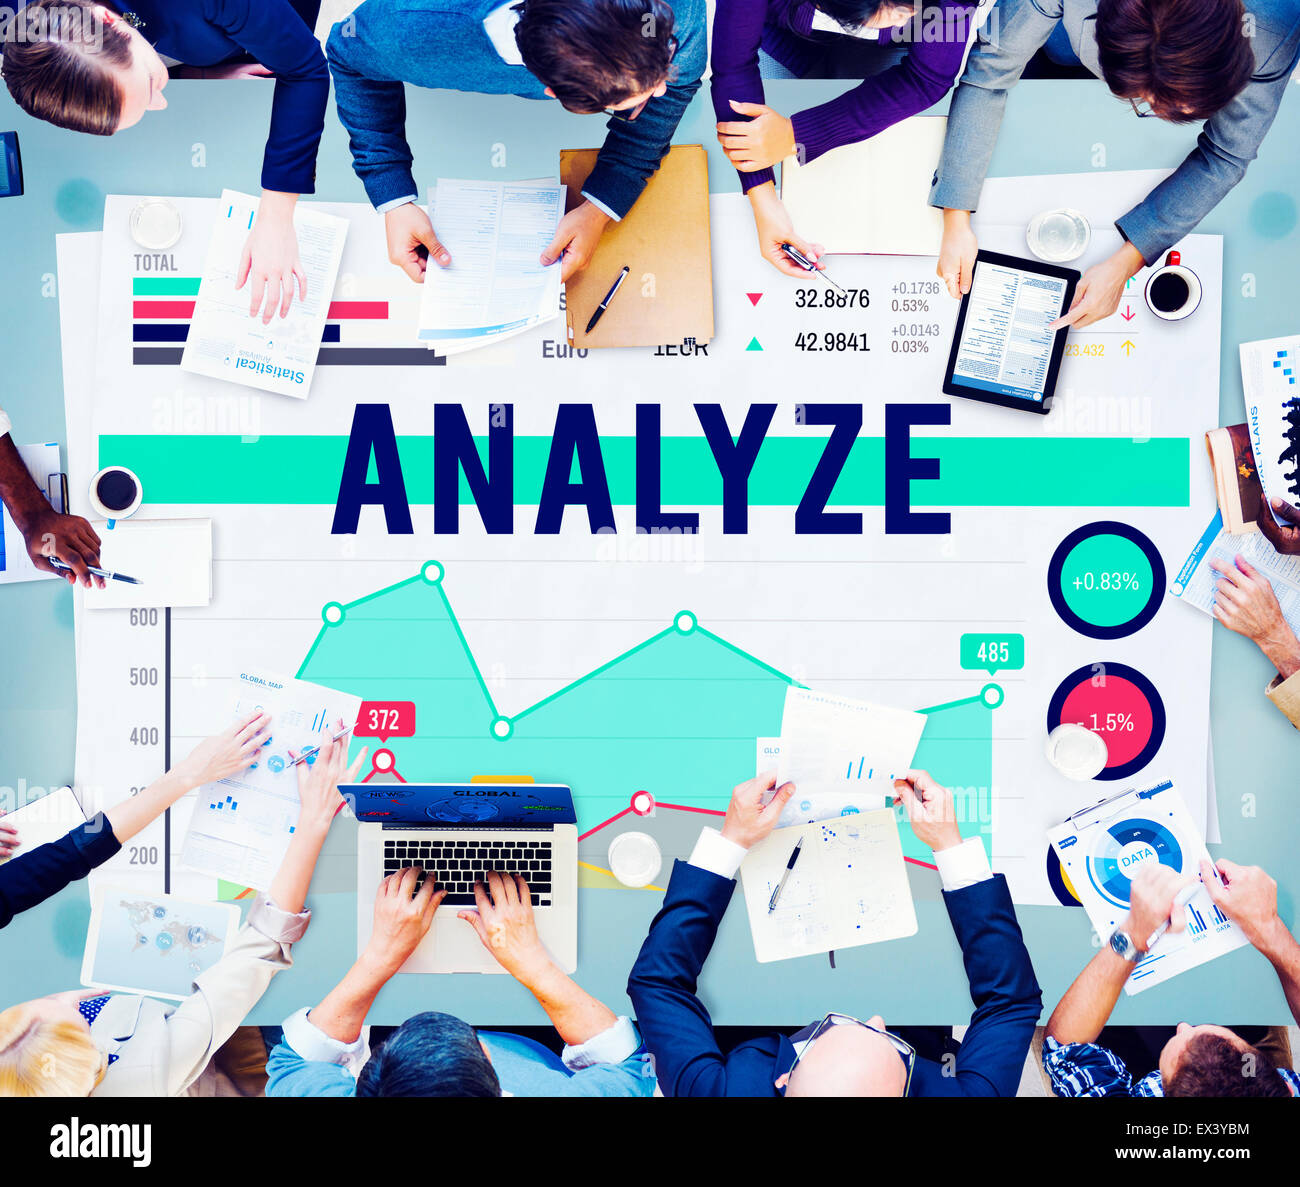 Analyze Analysis Strategy Business Marketing Concept Stock Photo